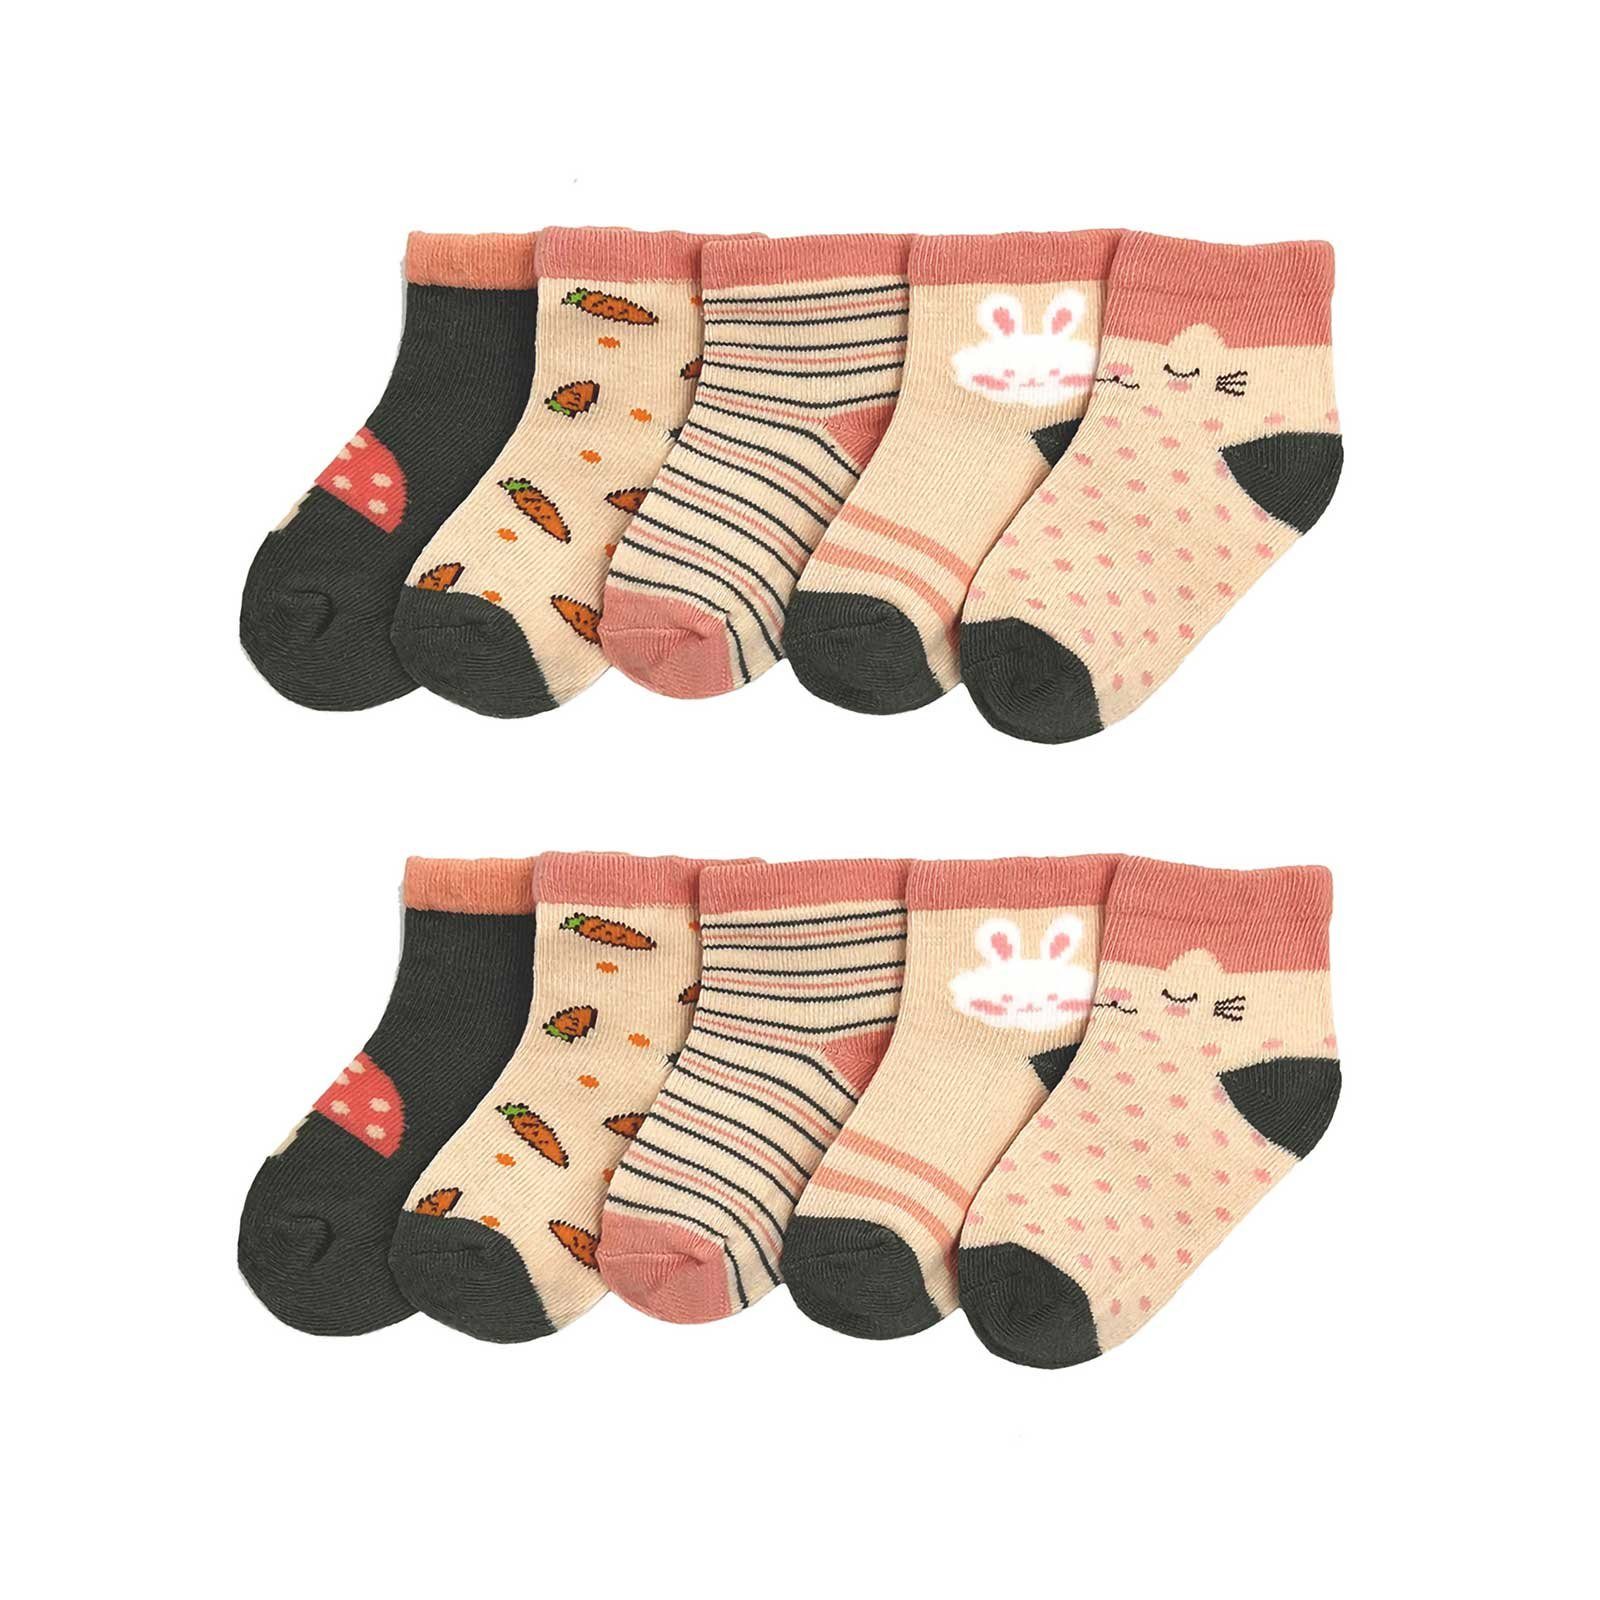 Vivi Idee Socken 5/10 Paar Kinder Baumwolle Socken Set, Sneakersocken Strümpfe füßlinge (10-Paar) 1-5 Jahre, Sport Kindersocken für Mädchen, Champignon